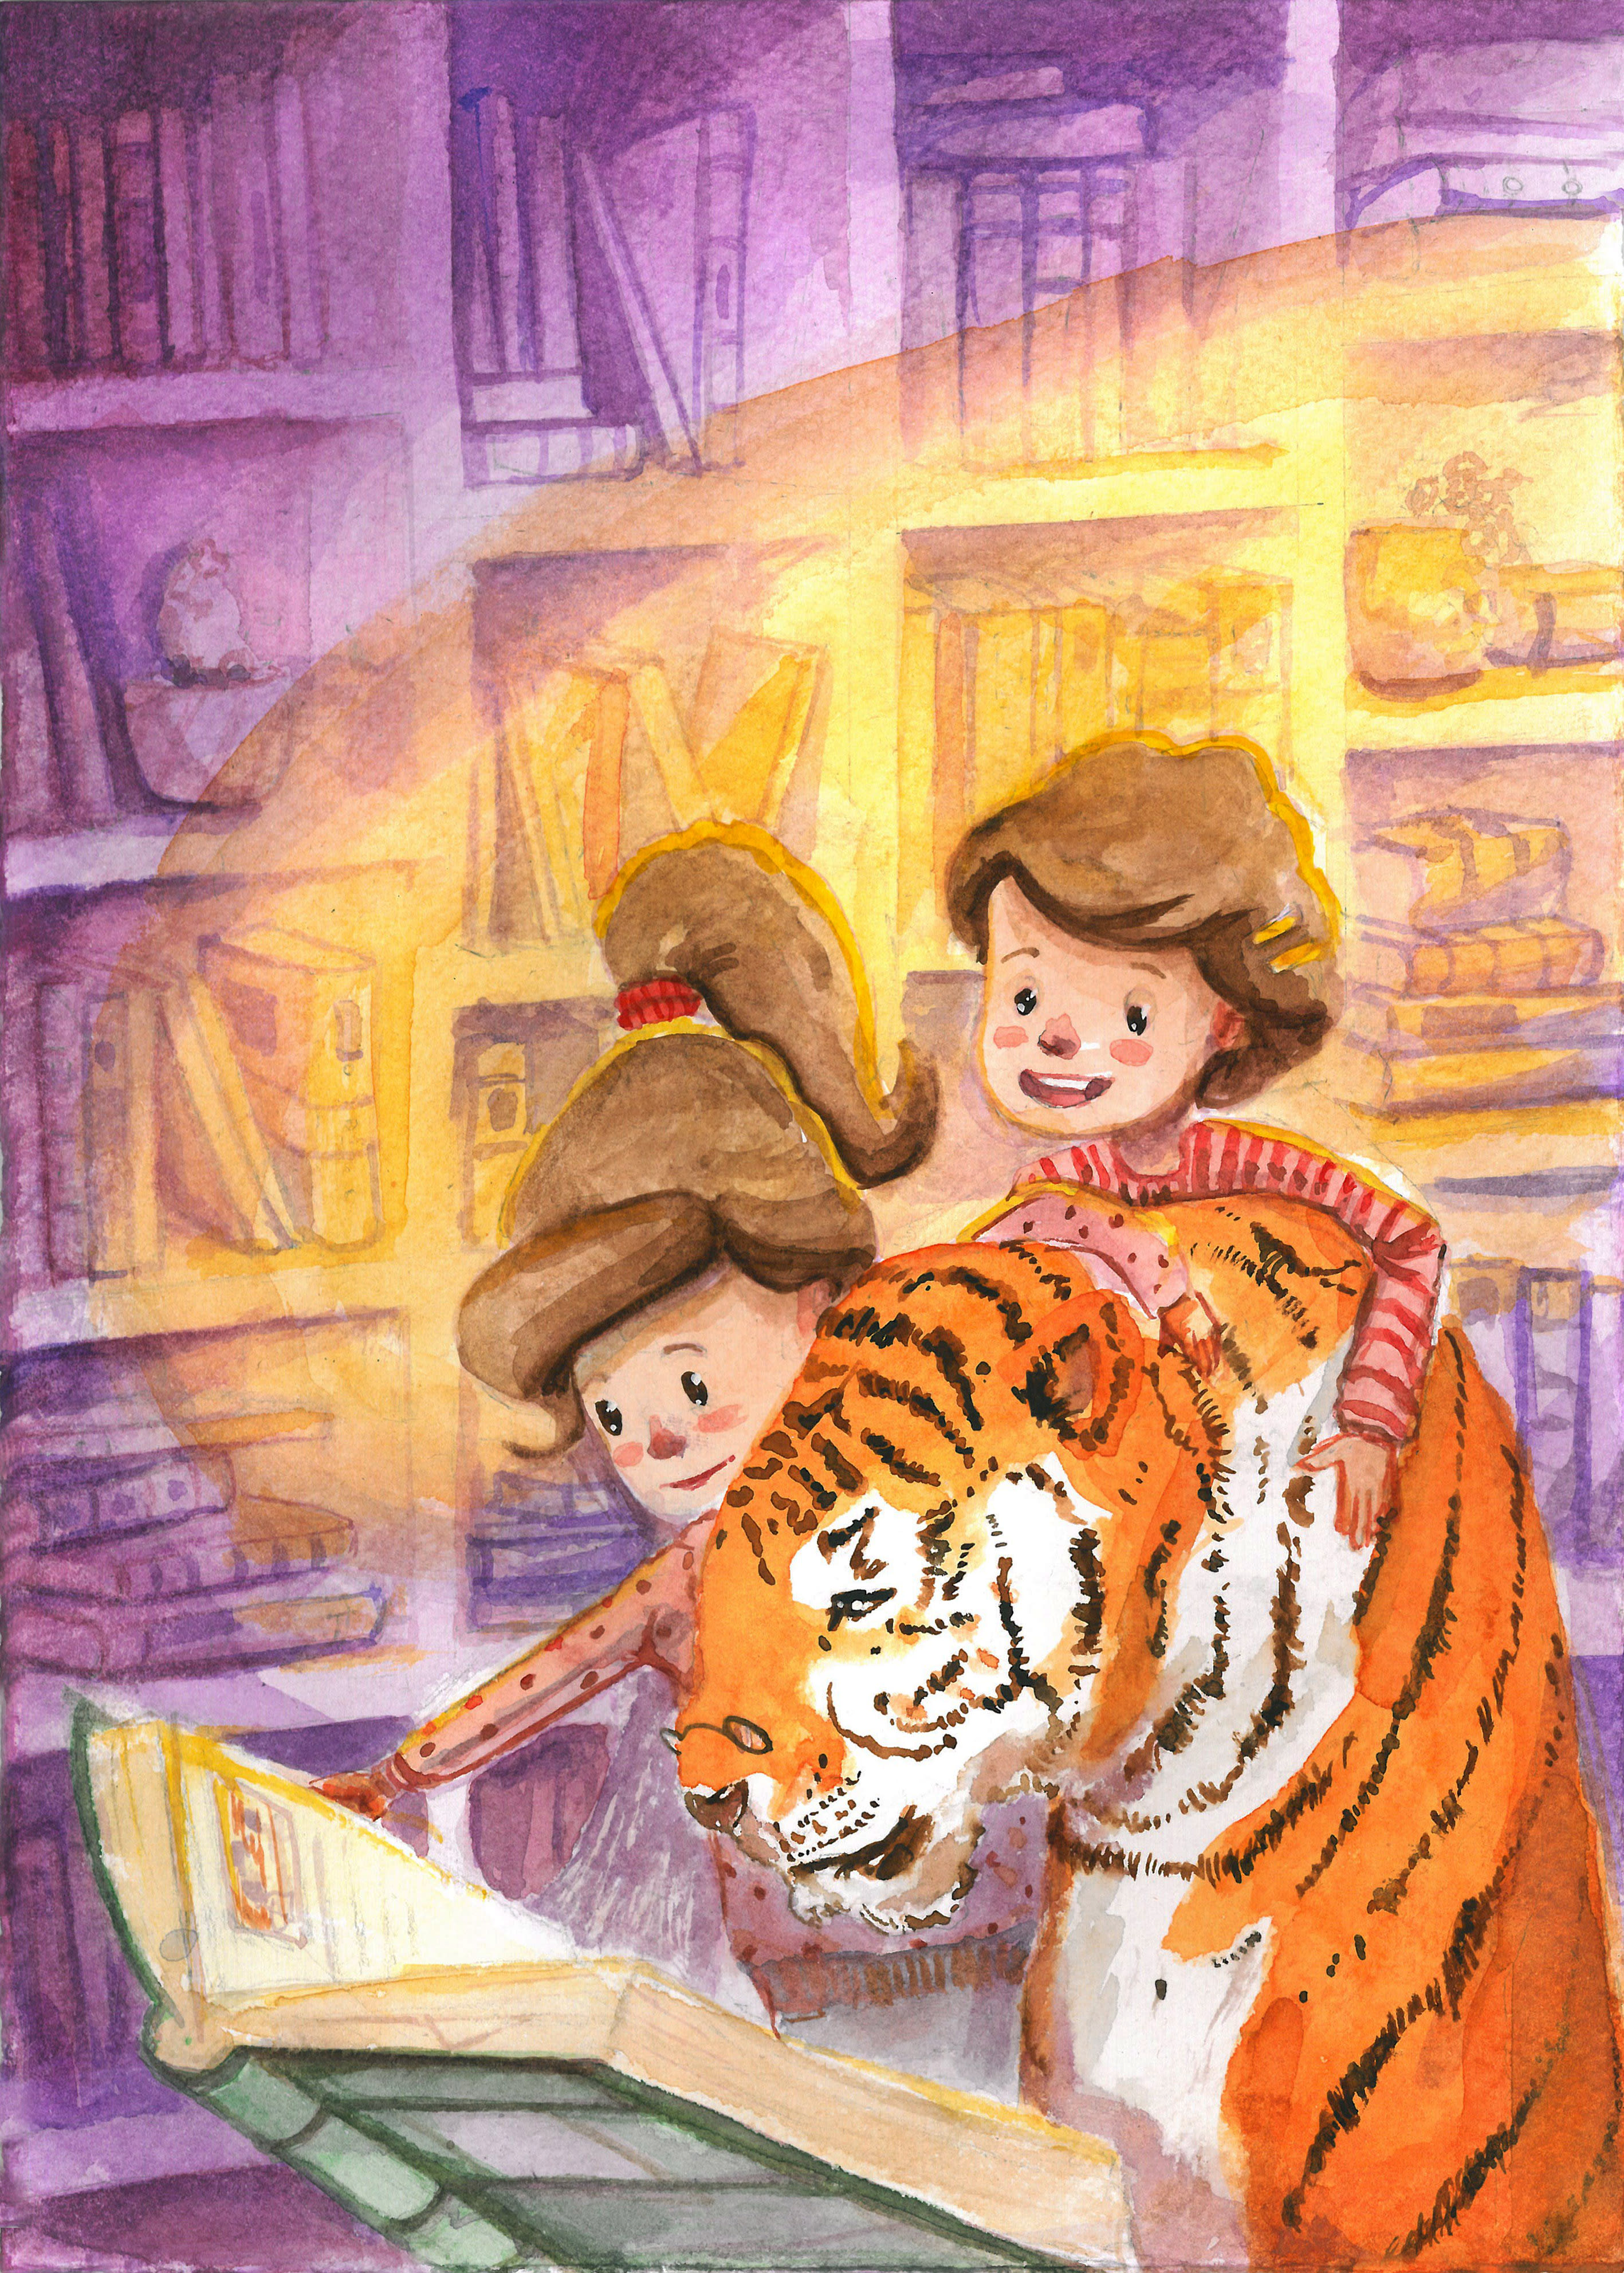 10 Best Children book illustration watercolor ideas  children's book  illustration, illustration, book illustration